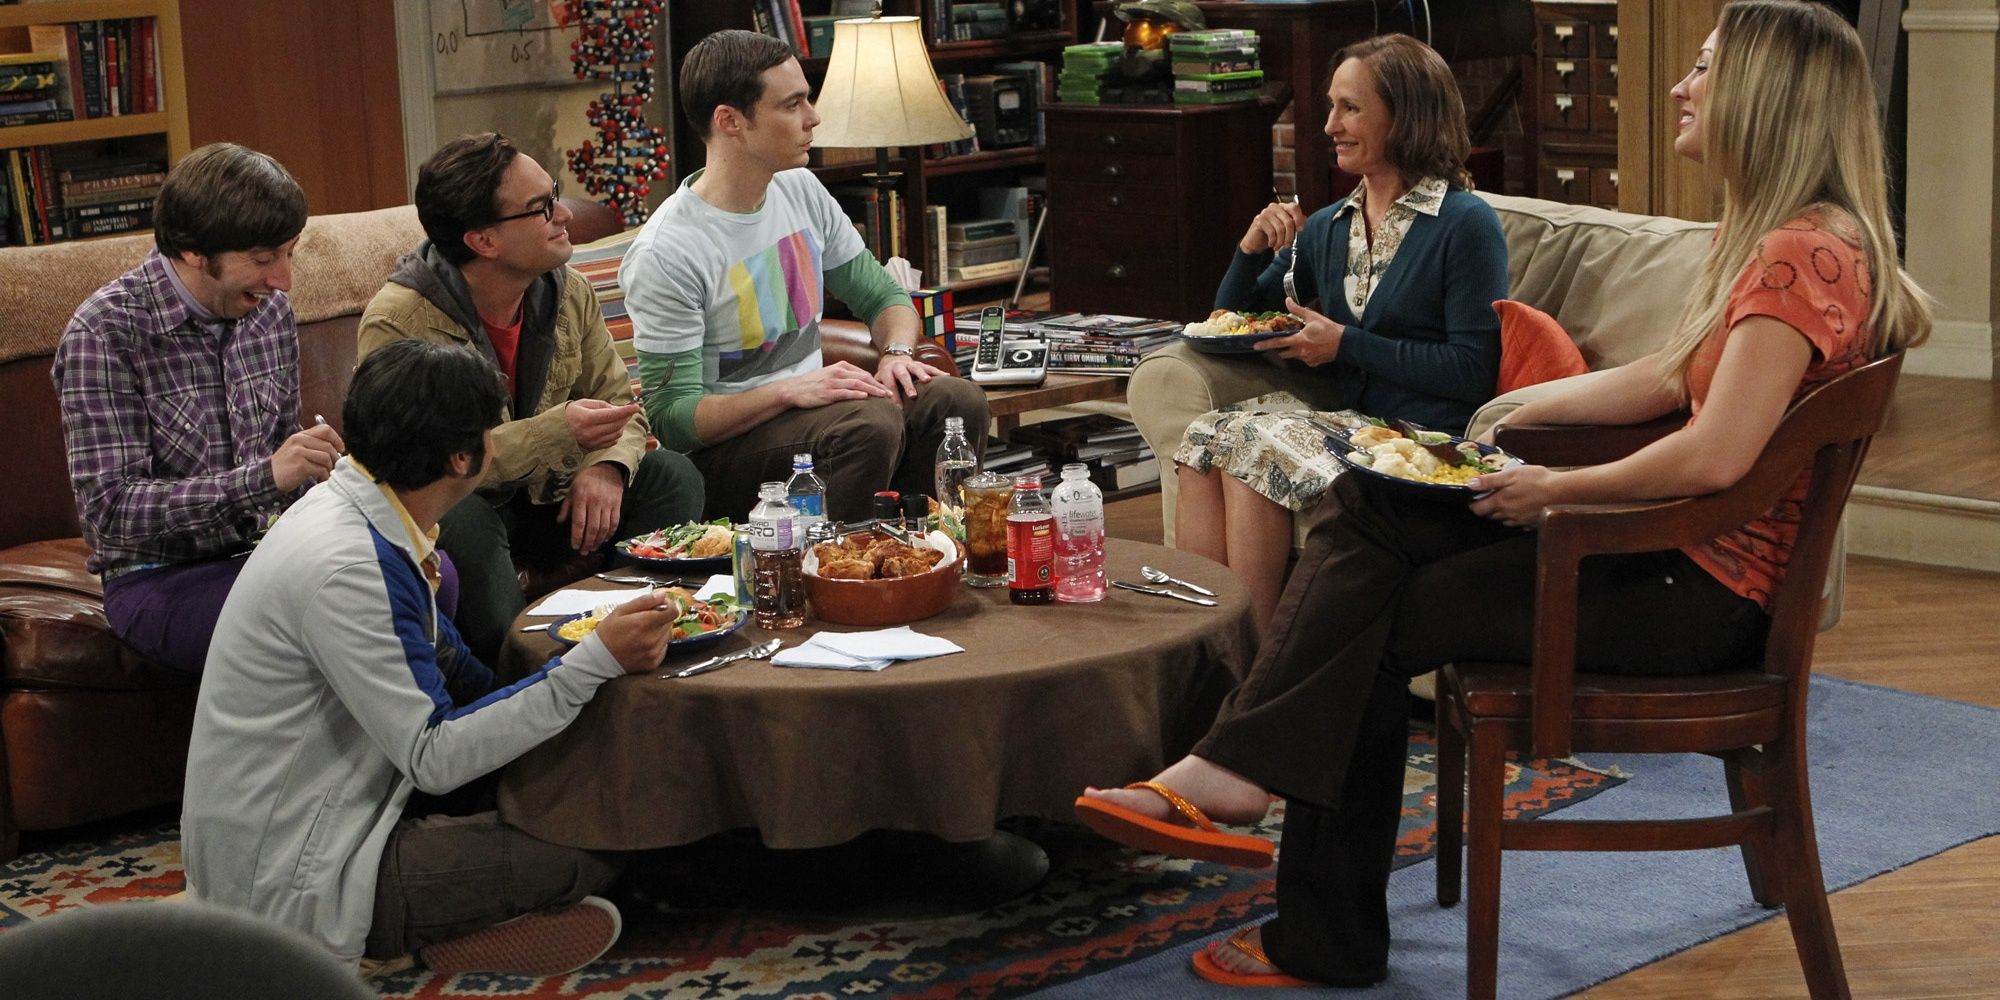 Mary tells stories anotu Sheldon in The Big Bang Theory